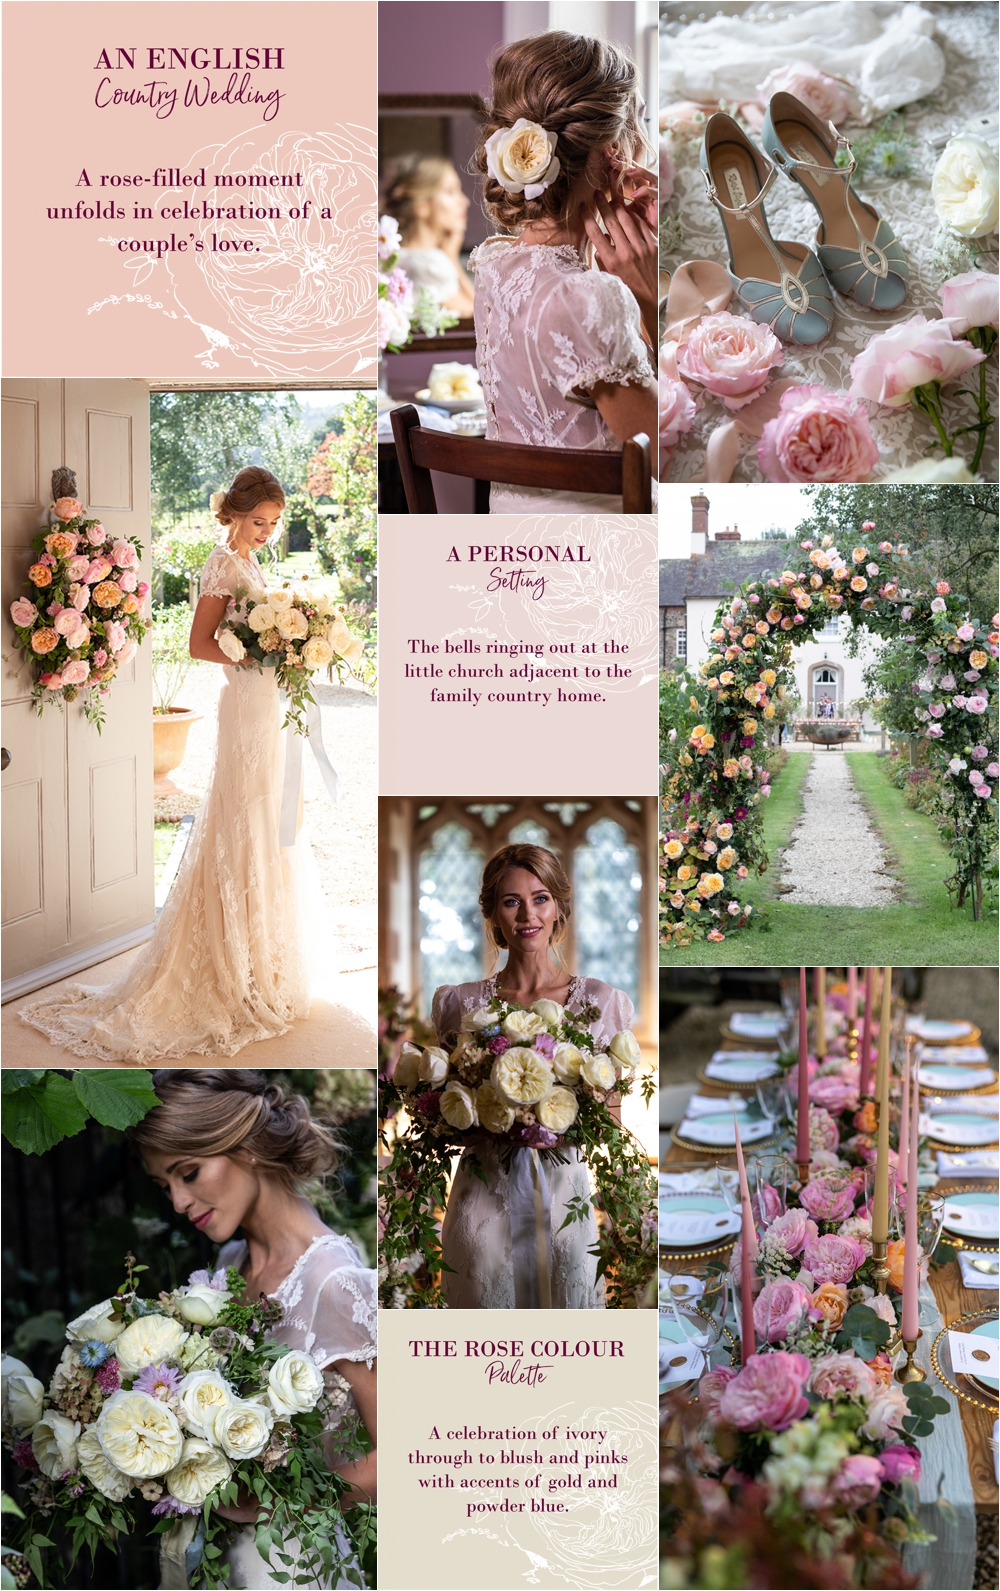 An English Country Wedding by David Austin Wedding Roses